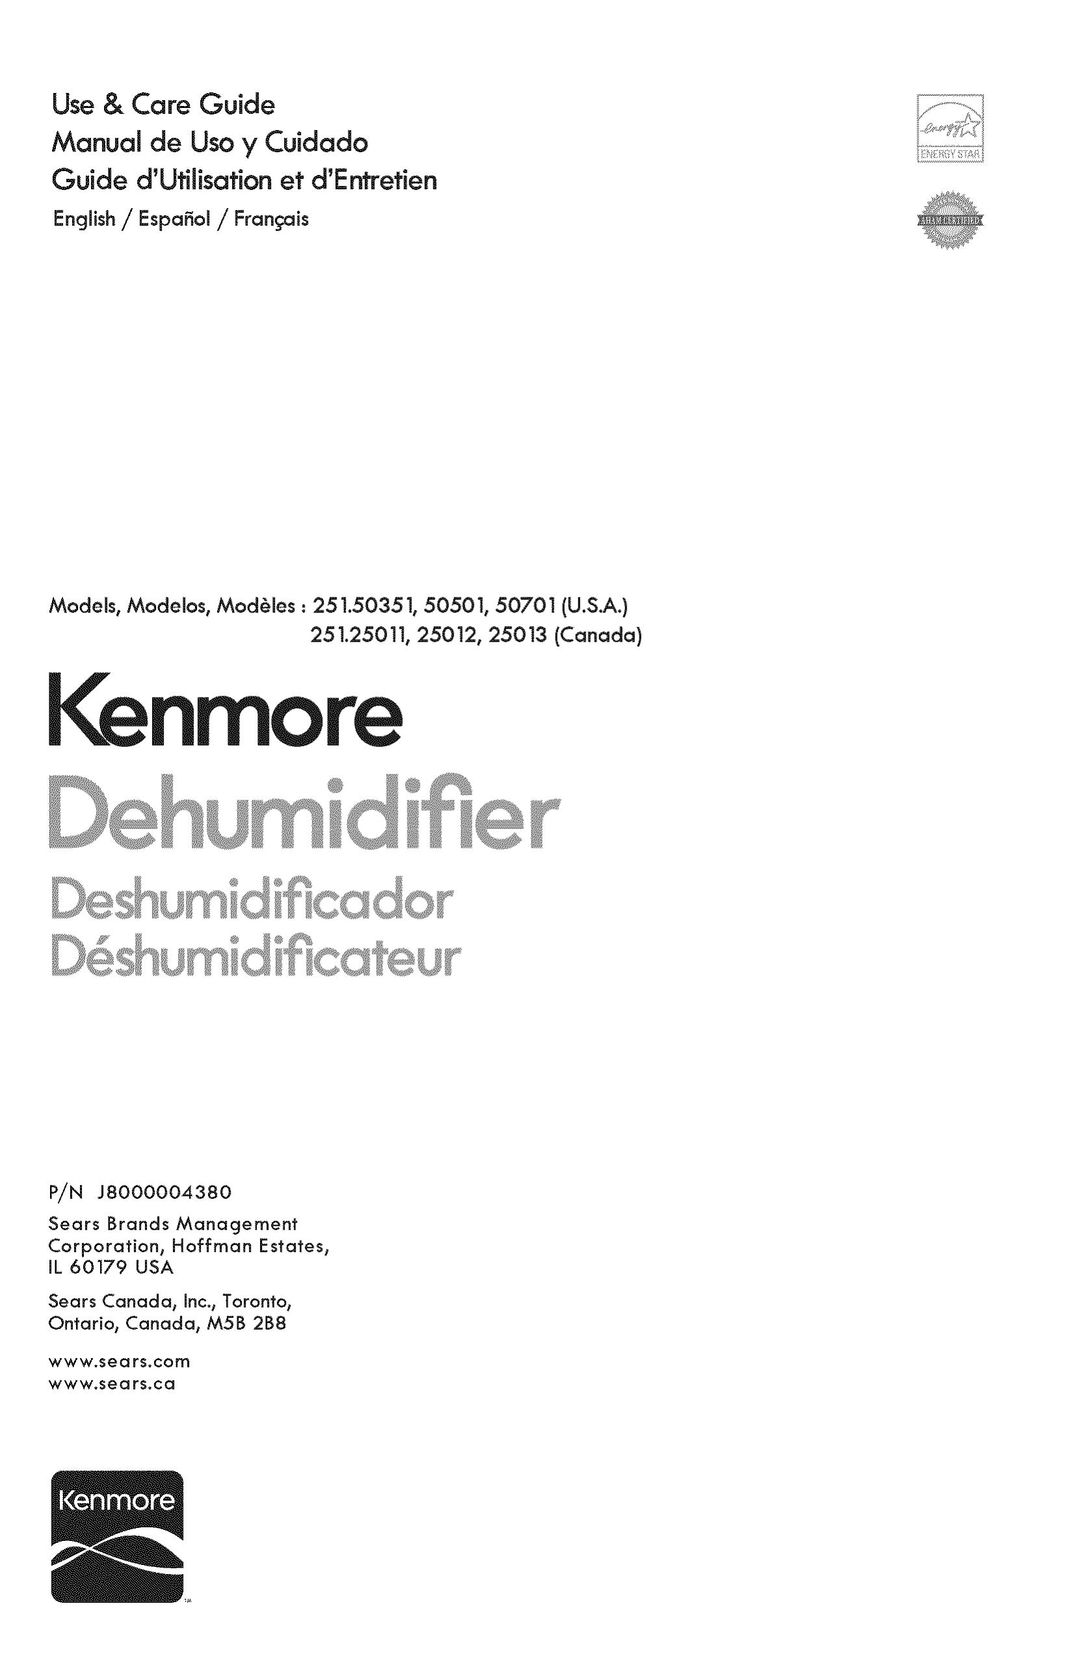 Kenmore 251.25011 Dehumidifier User Manual